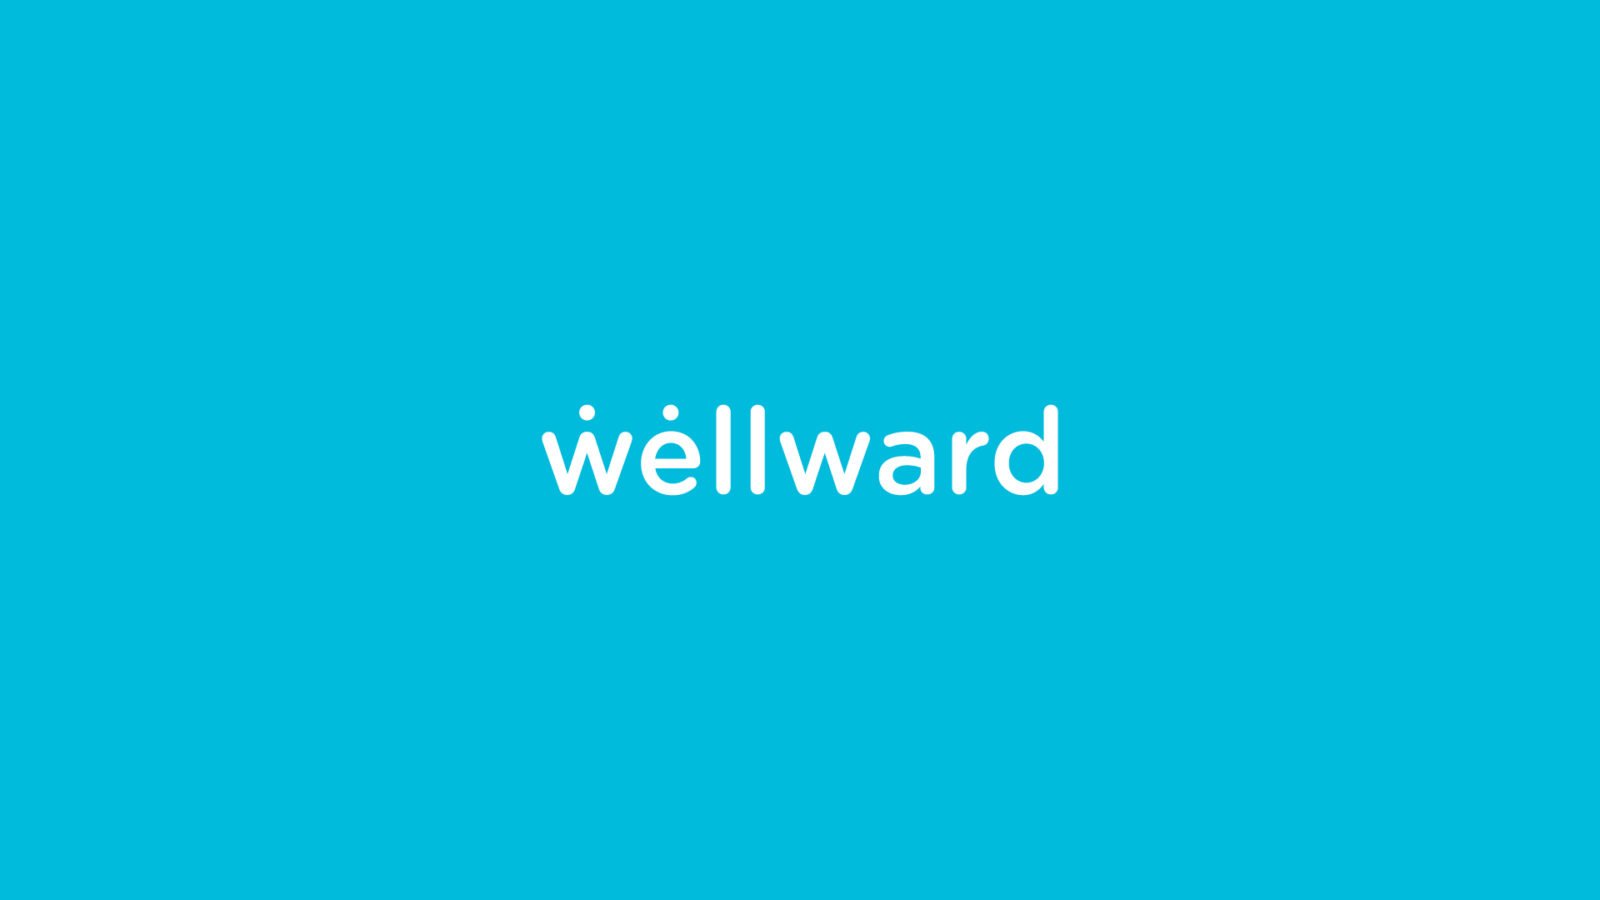 A Brand Identity for Wellward by Bullhorn Creative